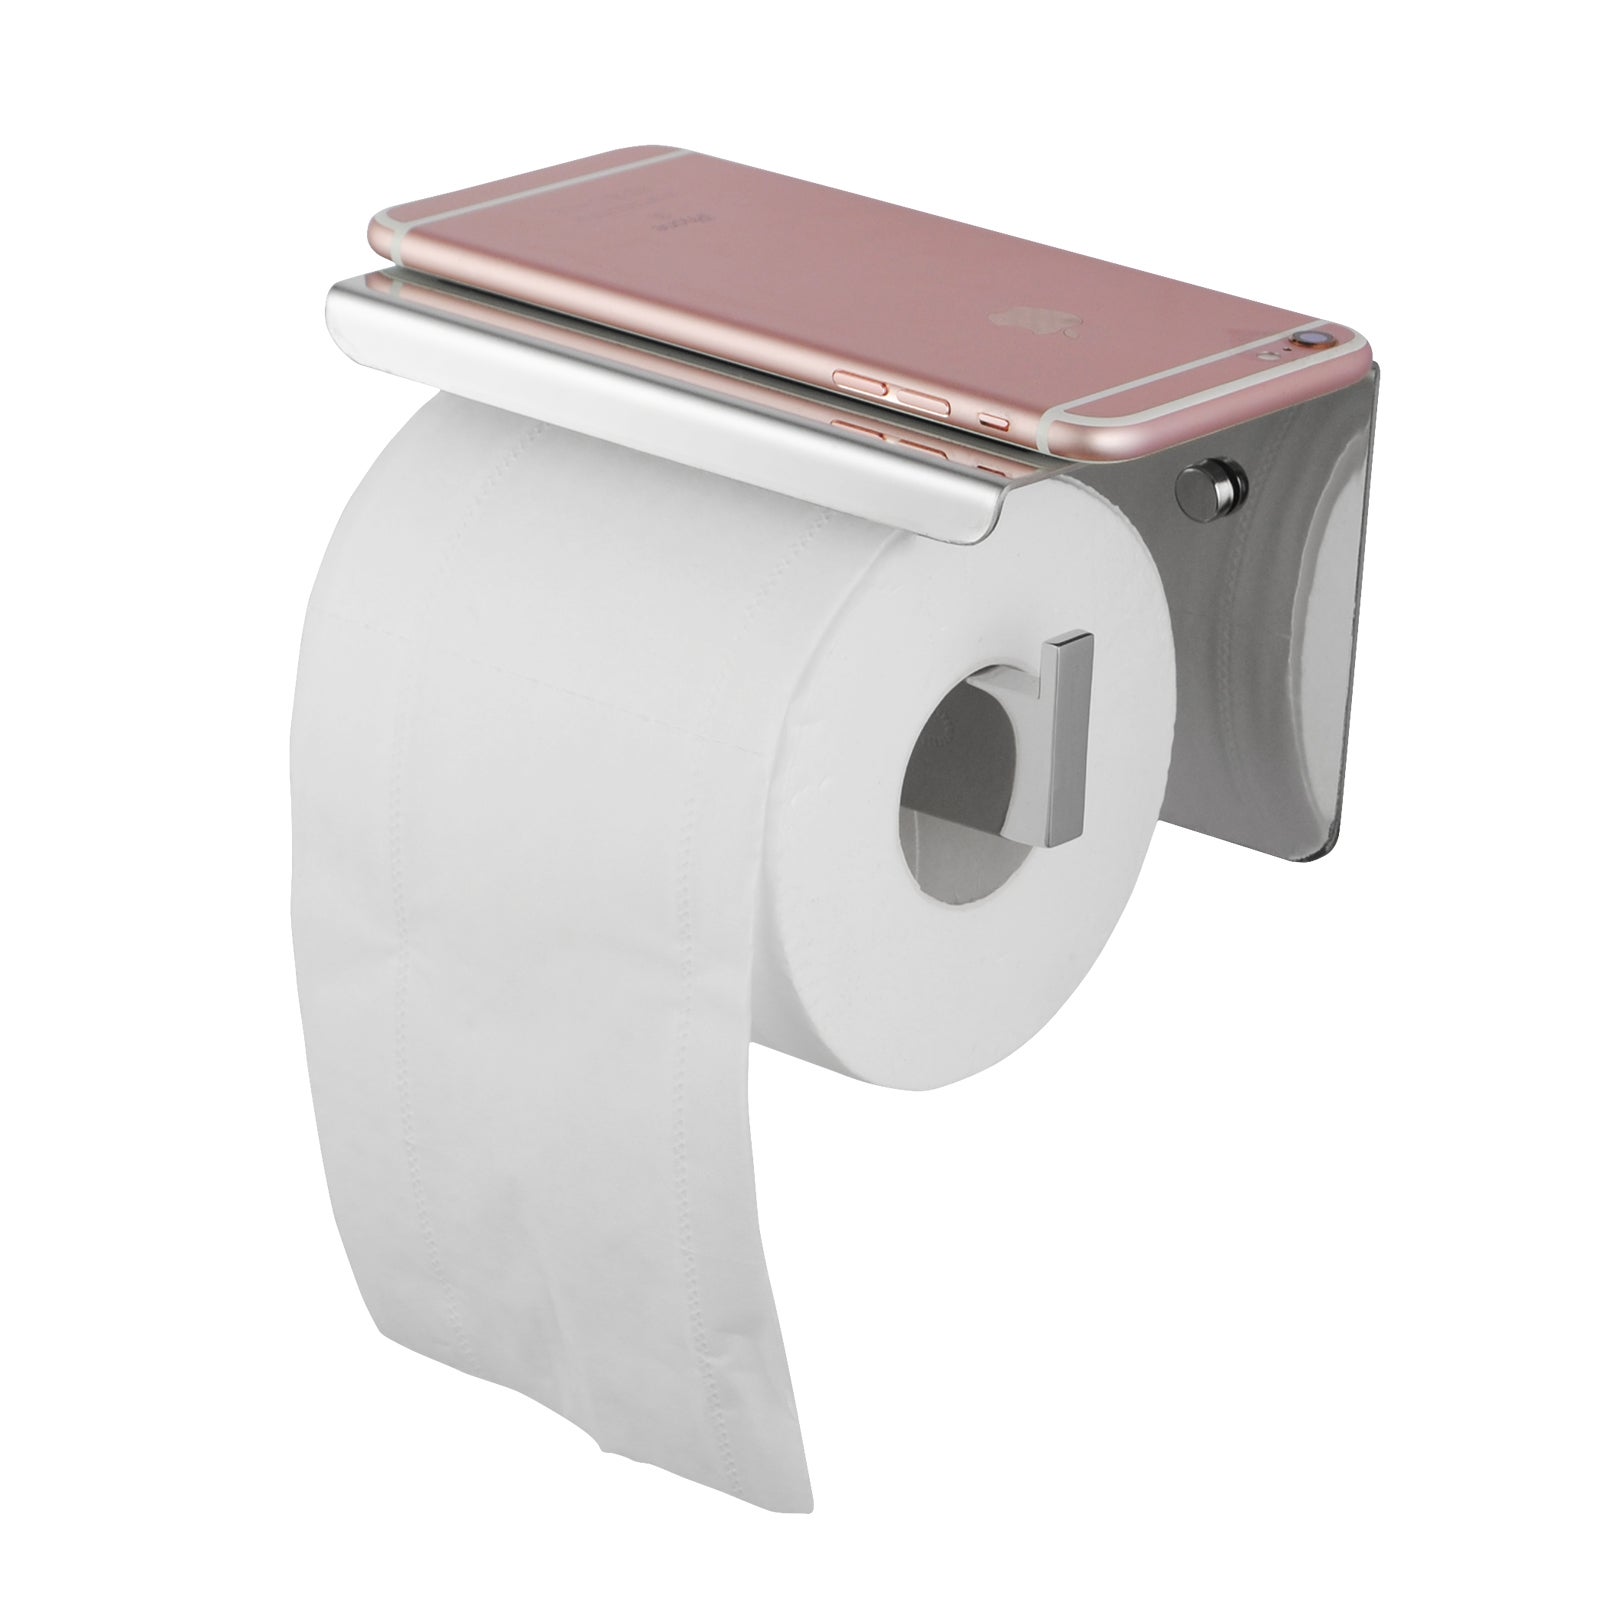 ACA Chrome Toilet Paper Holder with Phone Shelf Bathroom Accessories Tissue Roll Dispenser